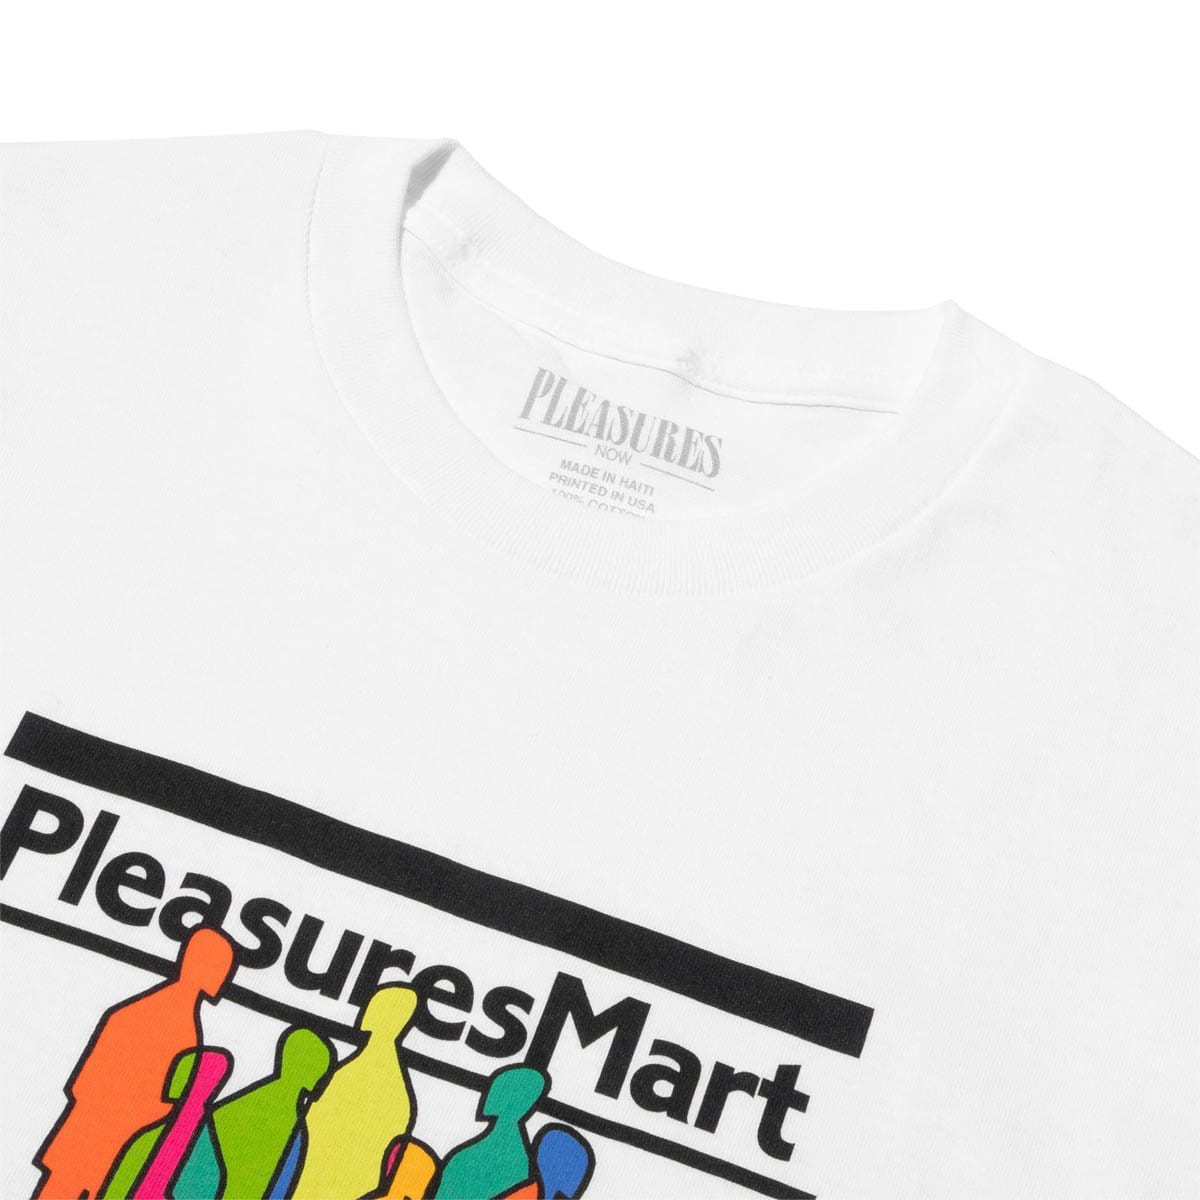 Pleasures T-Shirts PLEASURESMART T-SHIRT